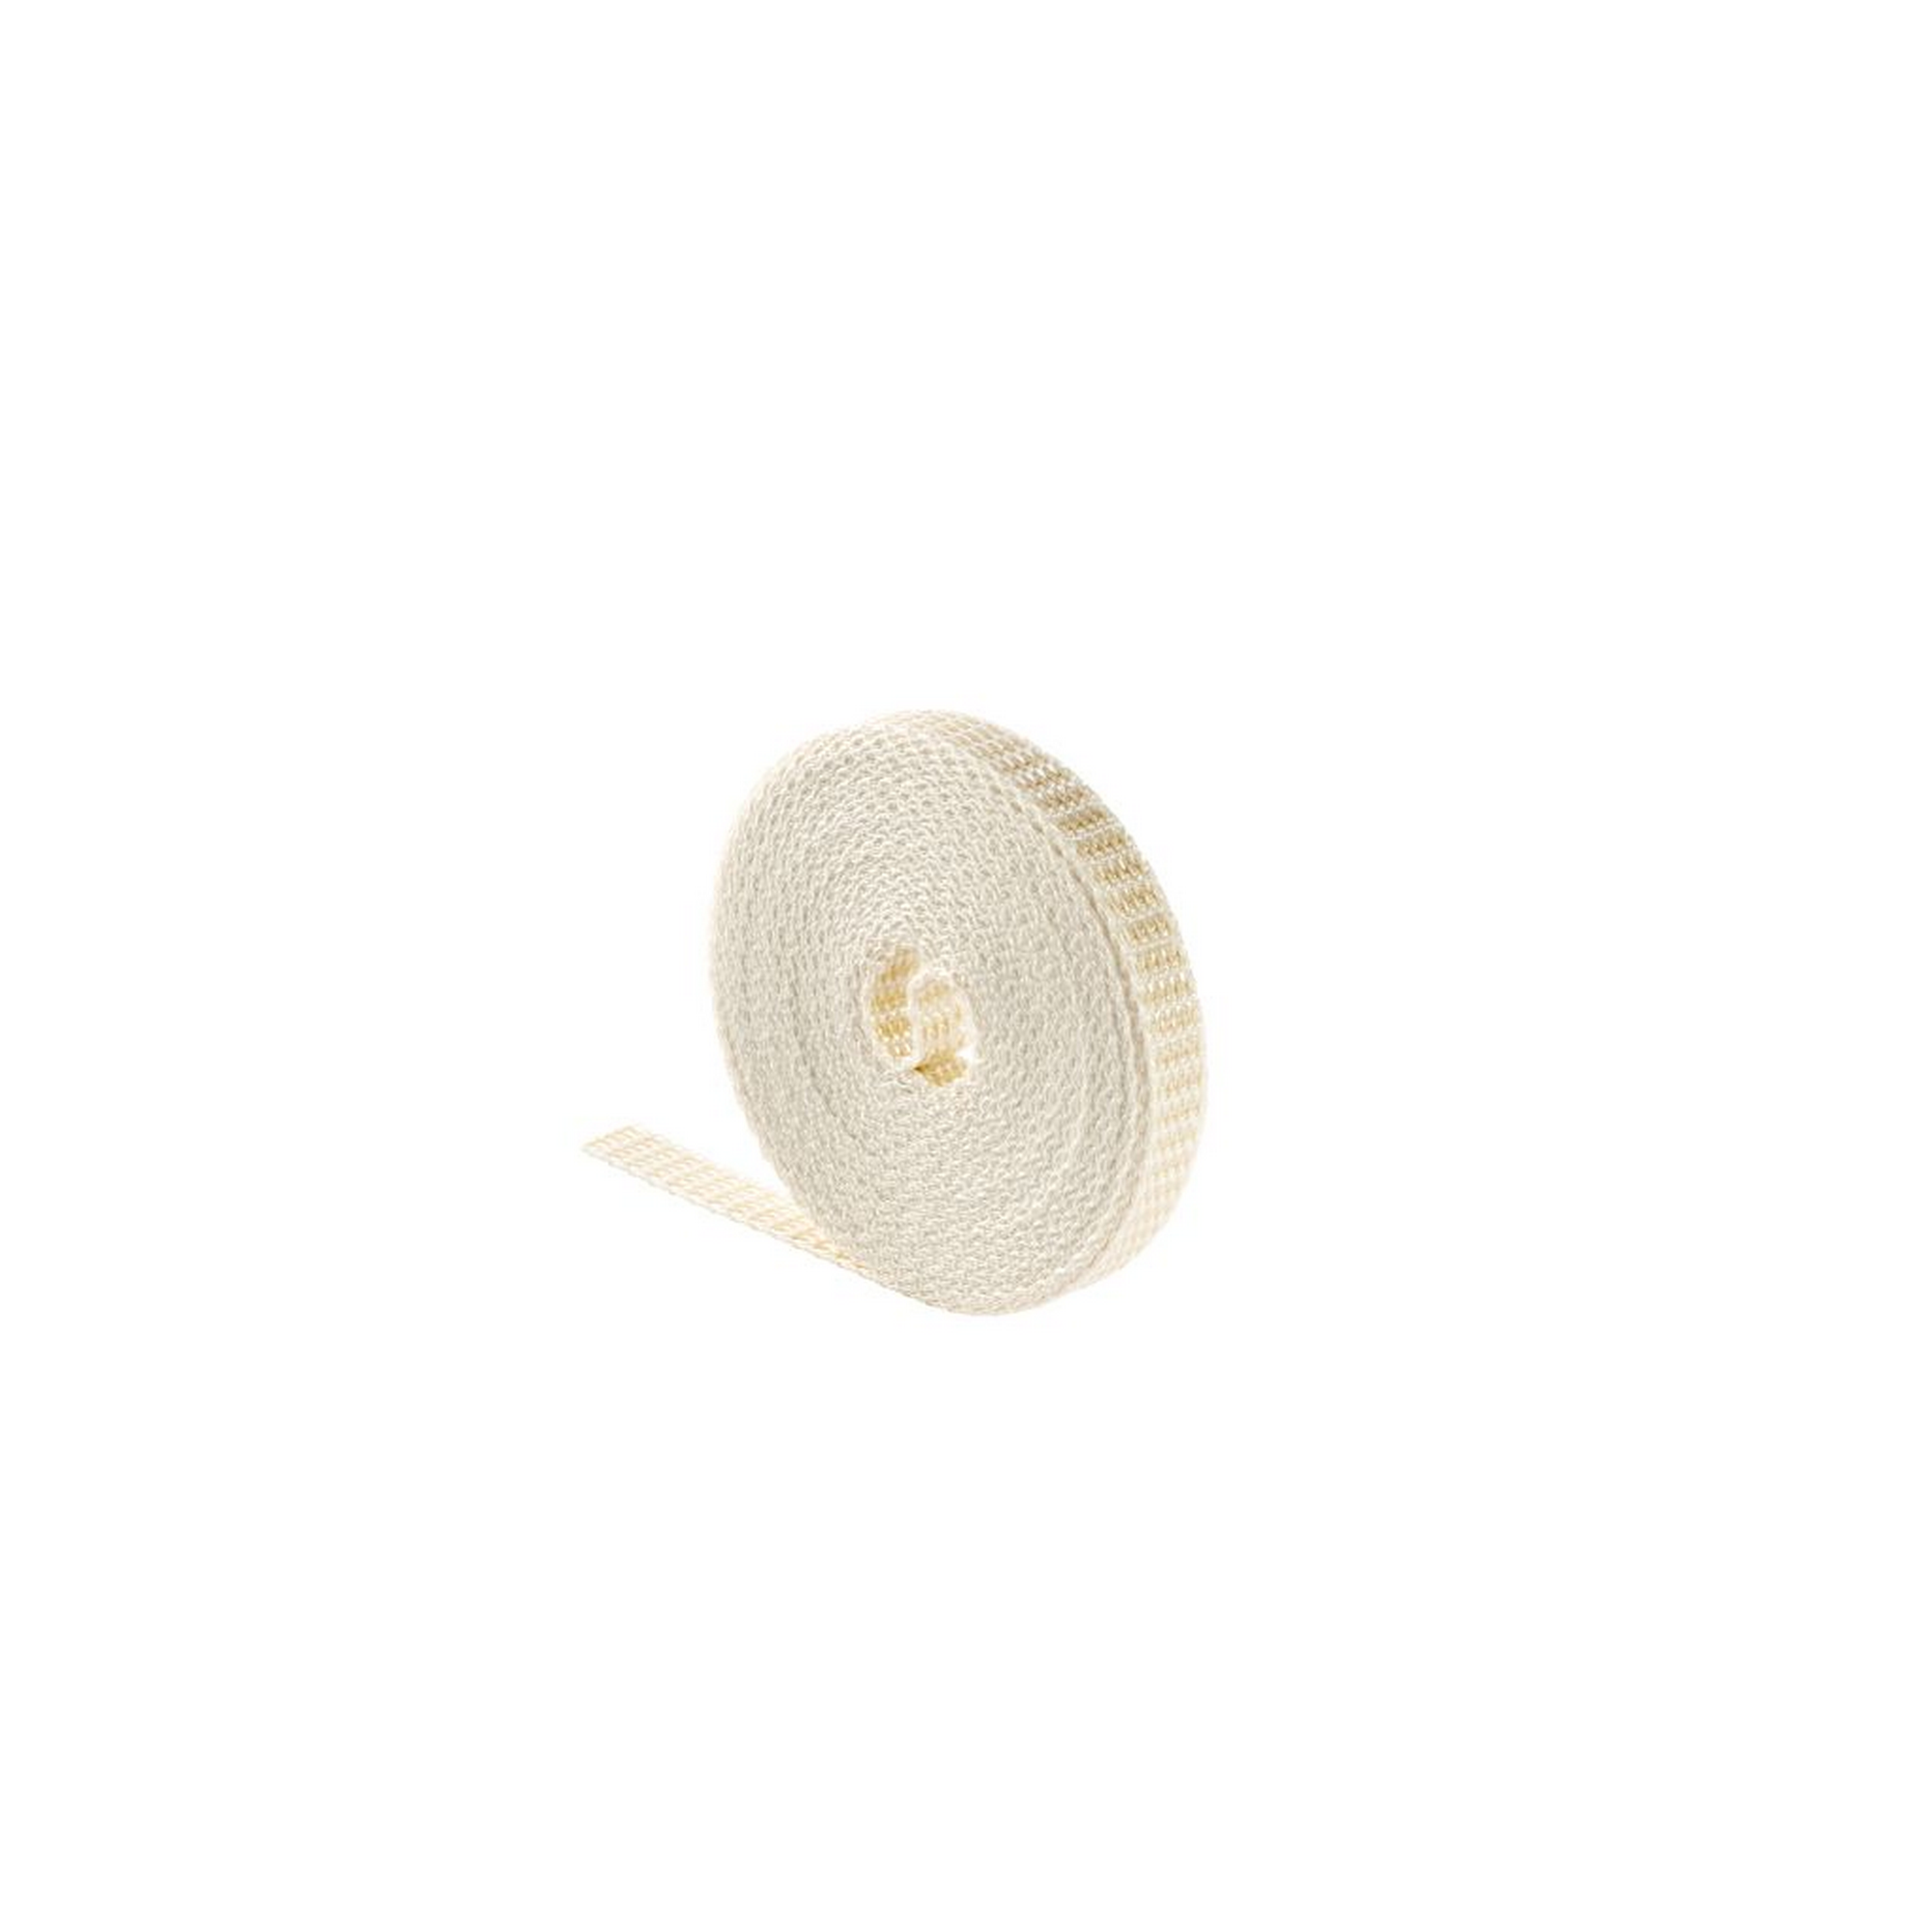 Rollladengurt 'Mini' beige, Länge 6 m + product picture